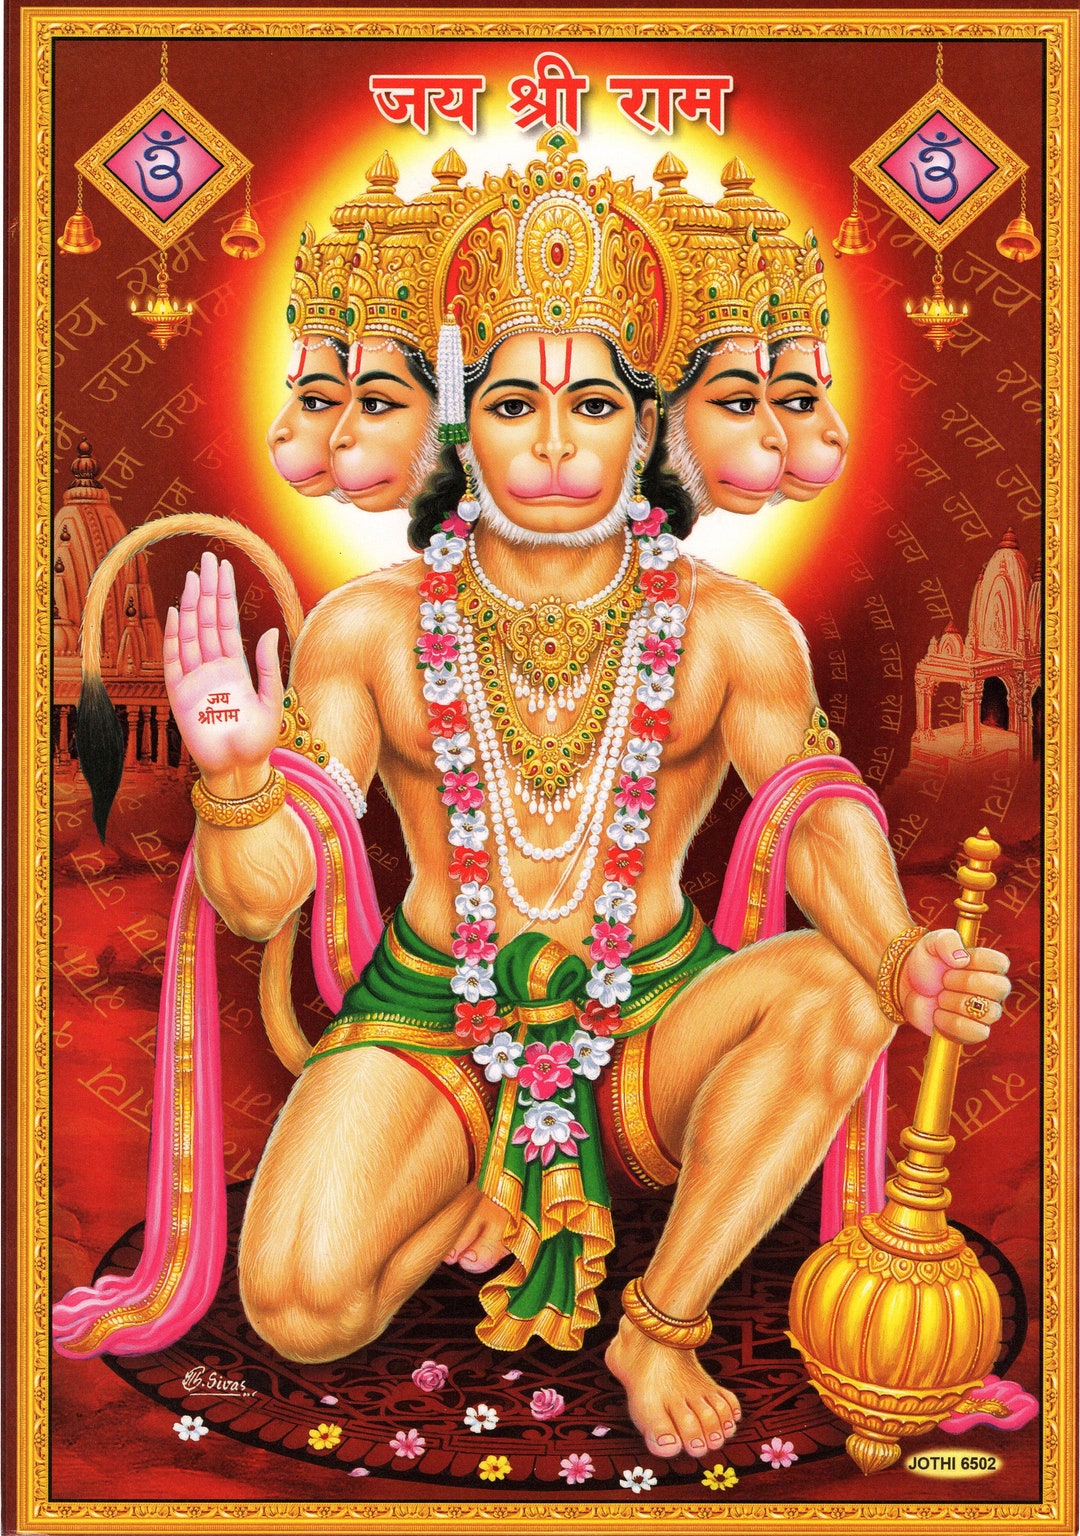 Hanuman ... Large Vintage-style Indian Hindu Devotional Poster ...